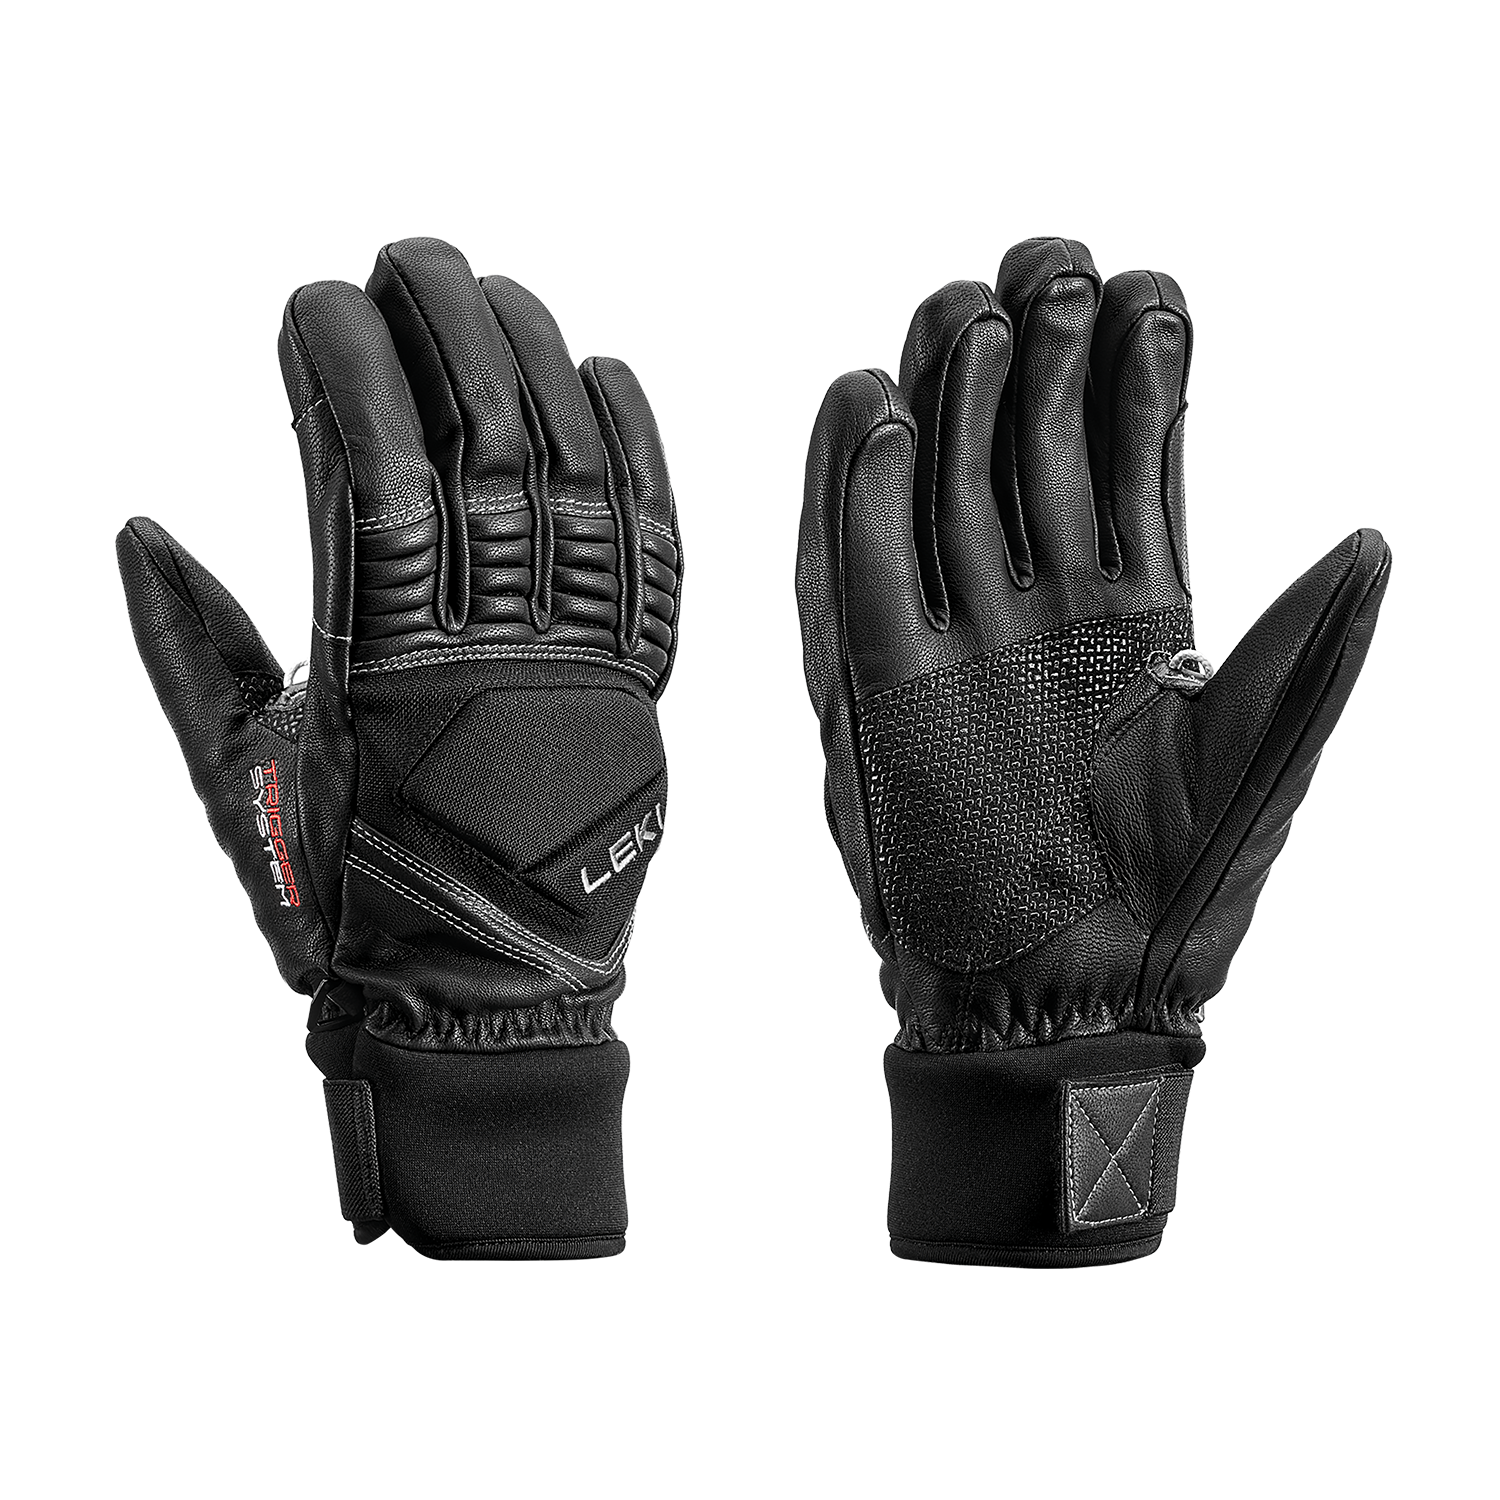 LEKI USA - COPPER S - Alpine Ski Gloves - Alpine Skiing Gloves - LEKI USA